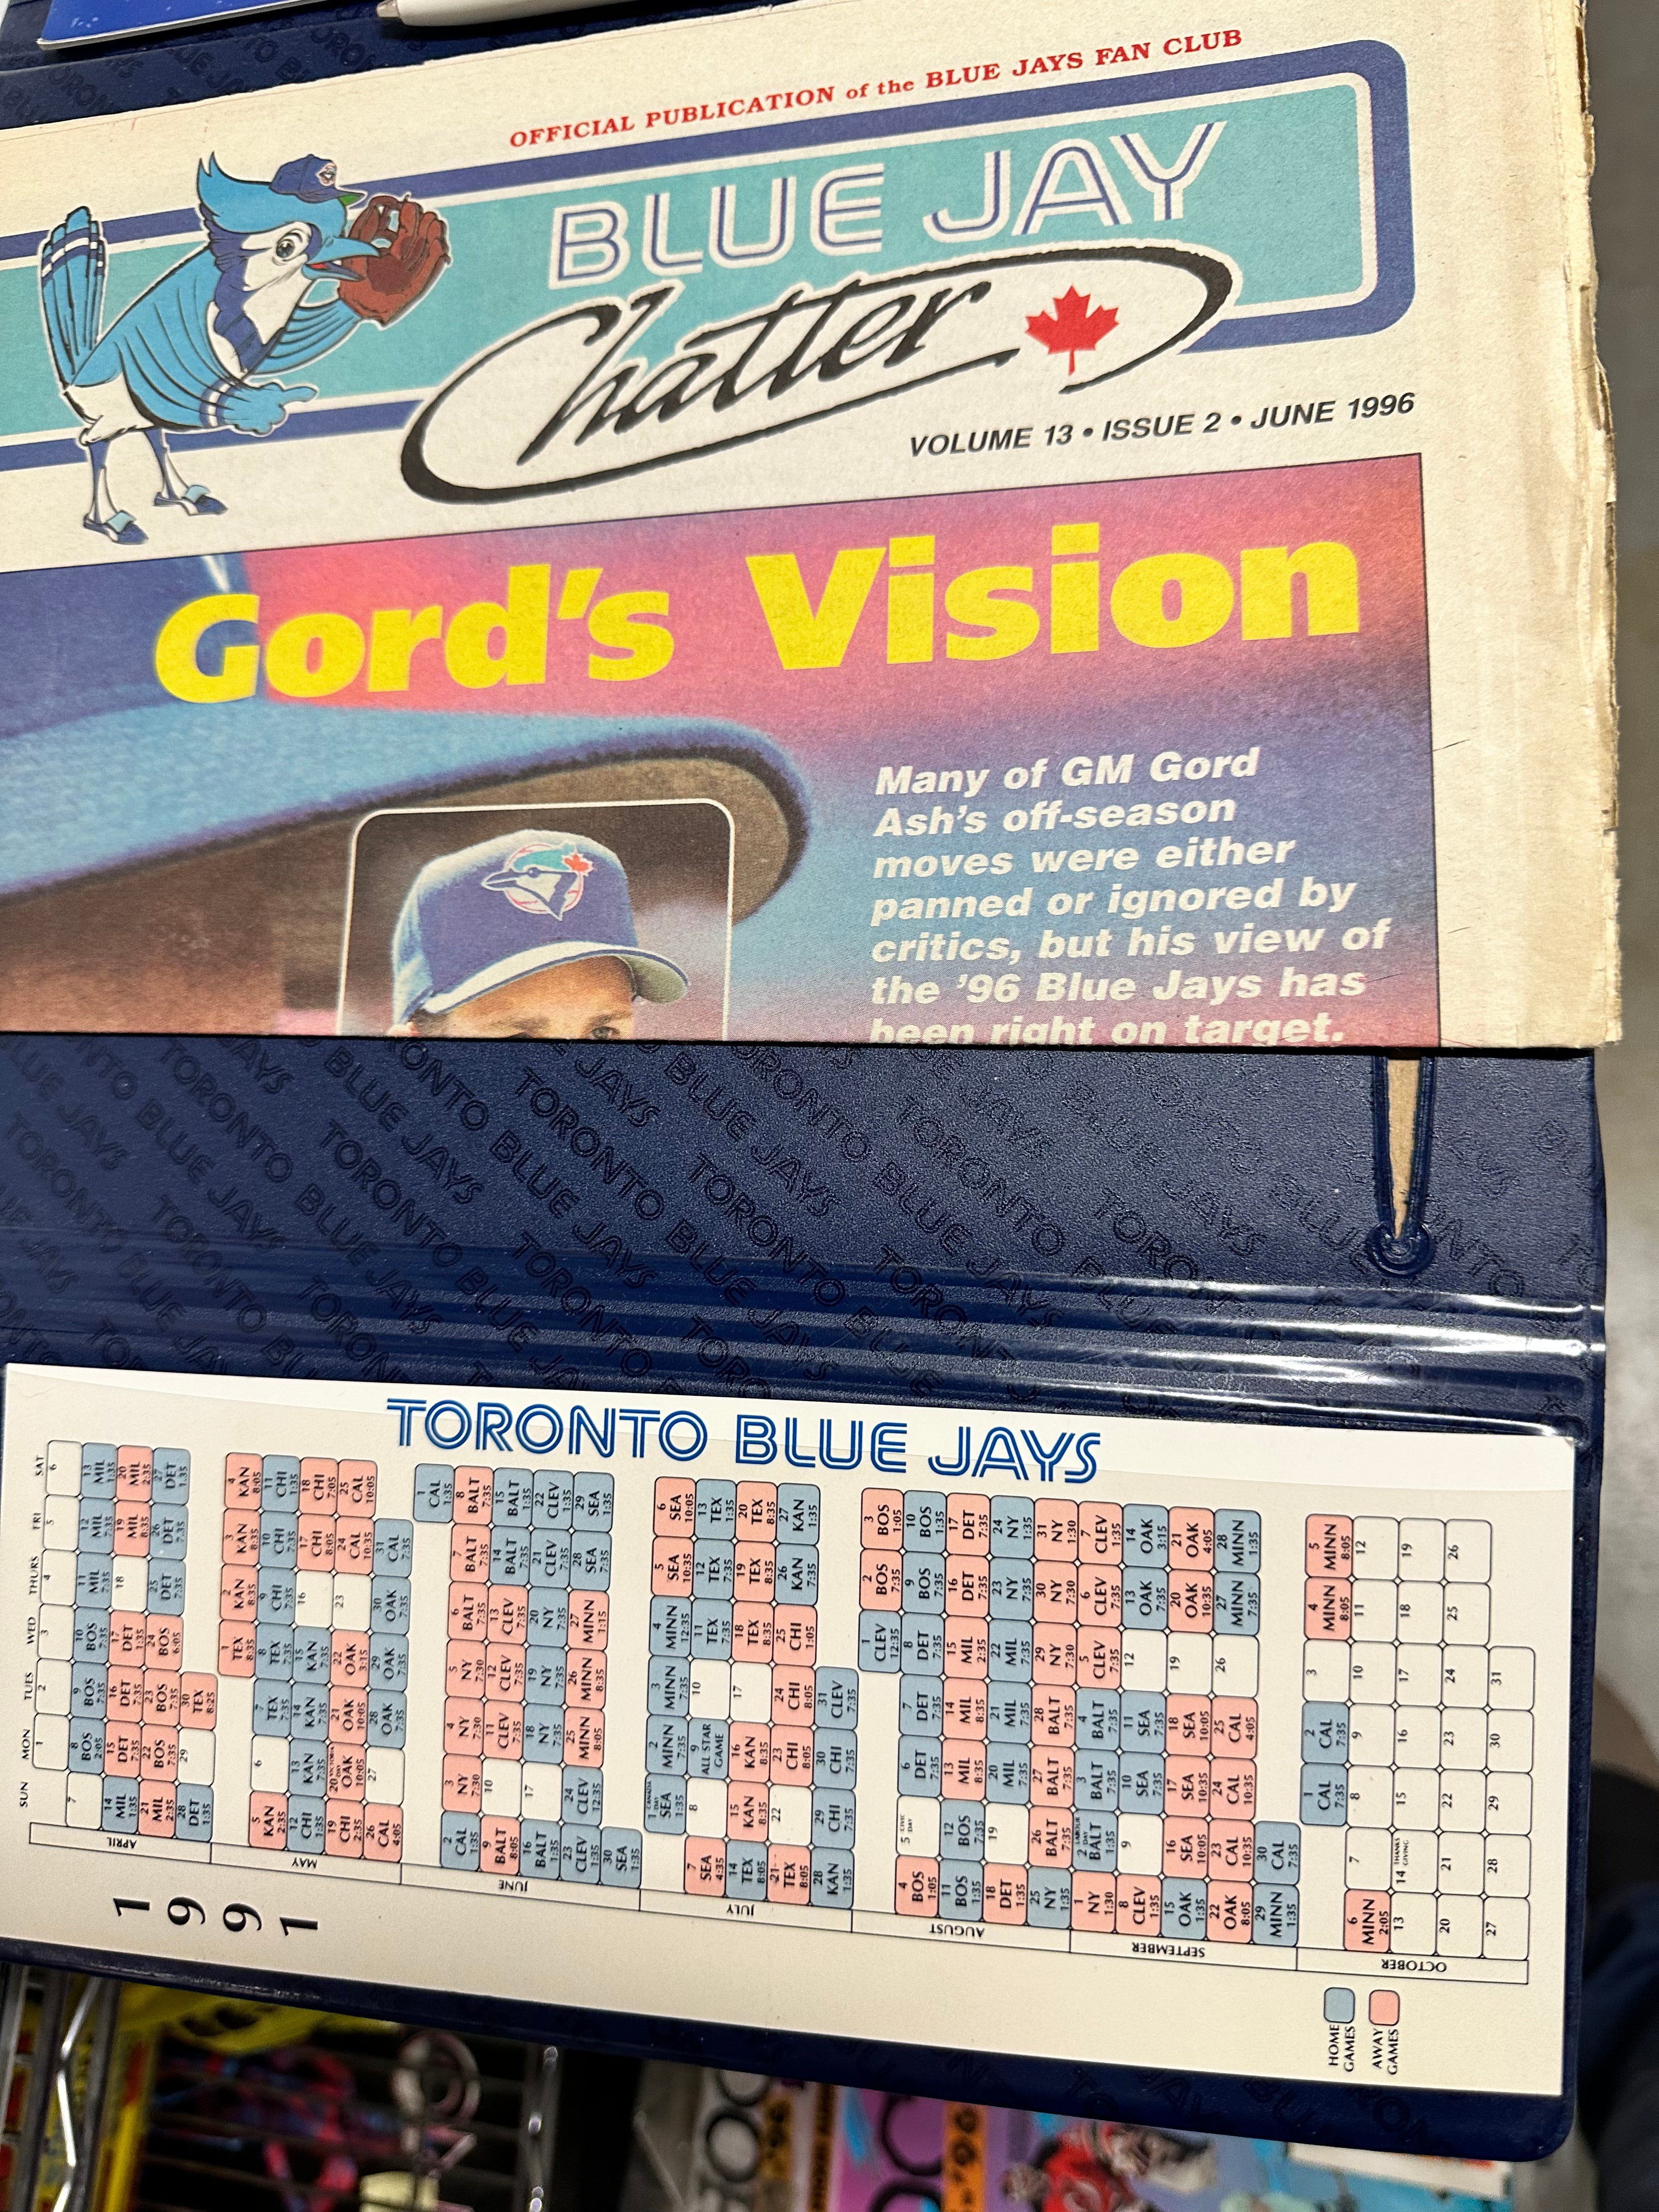 Blue Jays baseball season ticket holder custom binder with Calendar, pen and more 1997